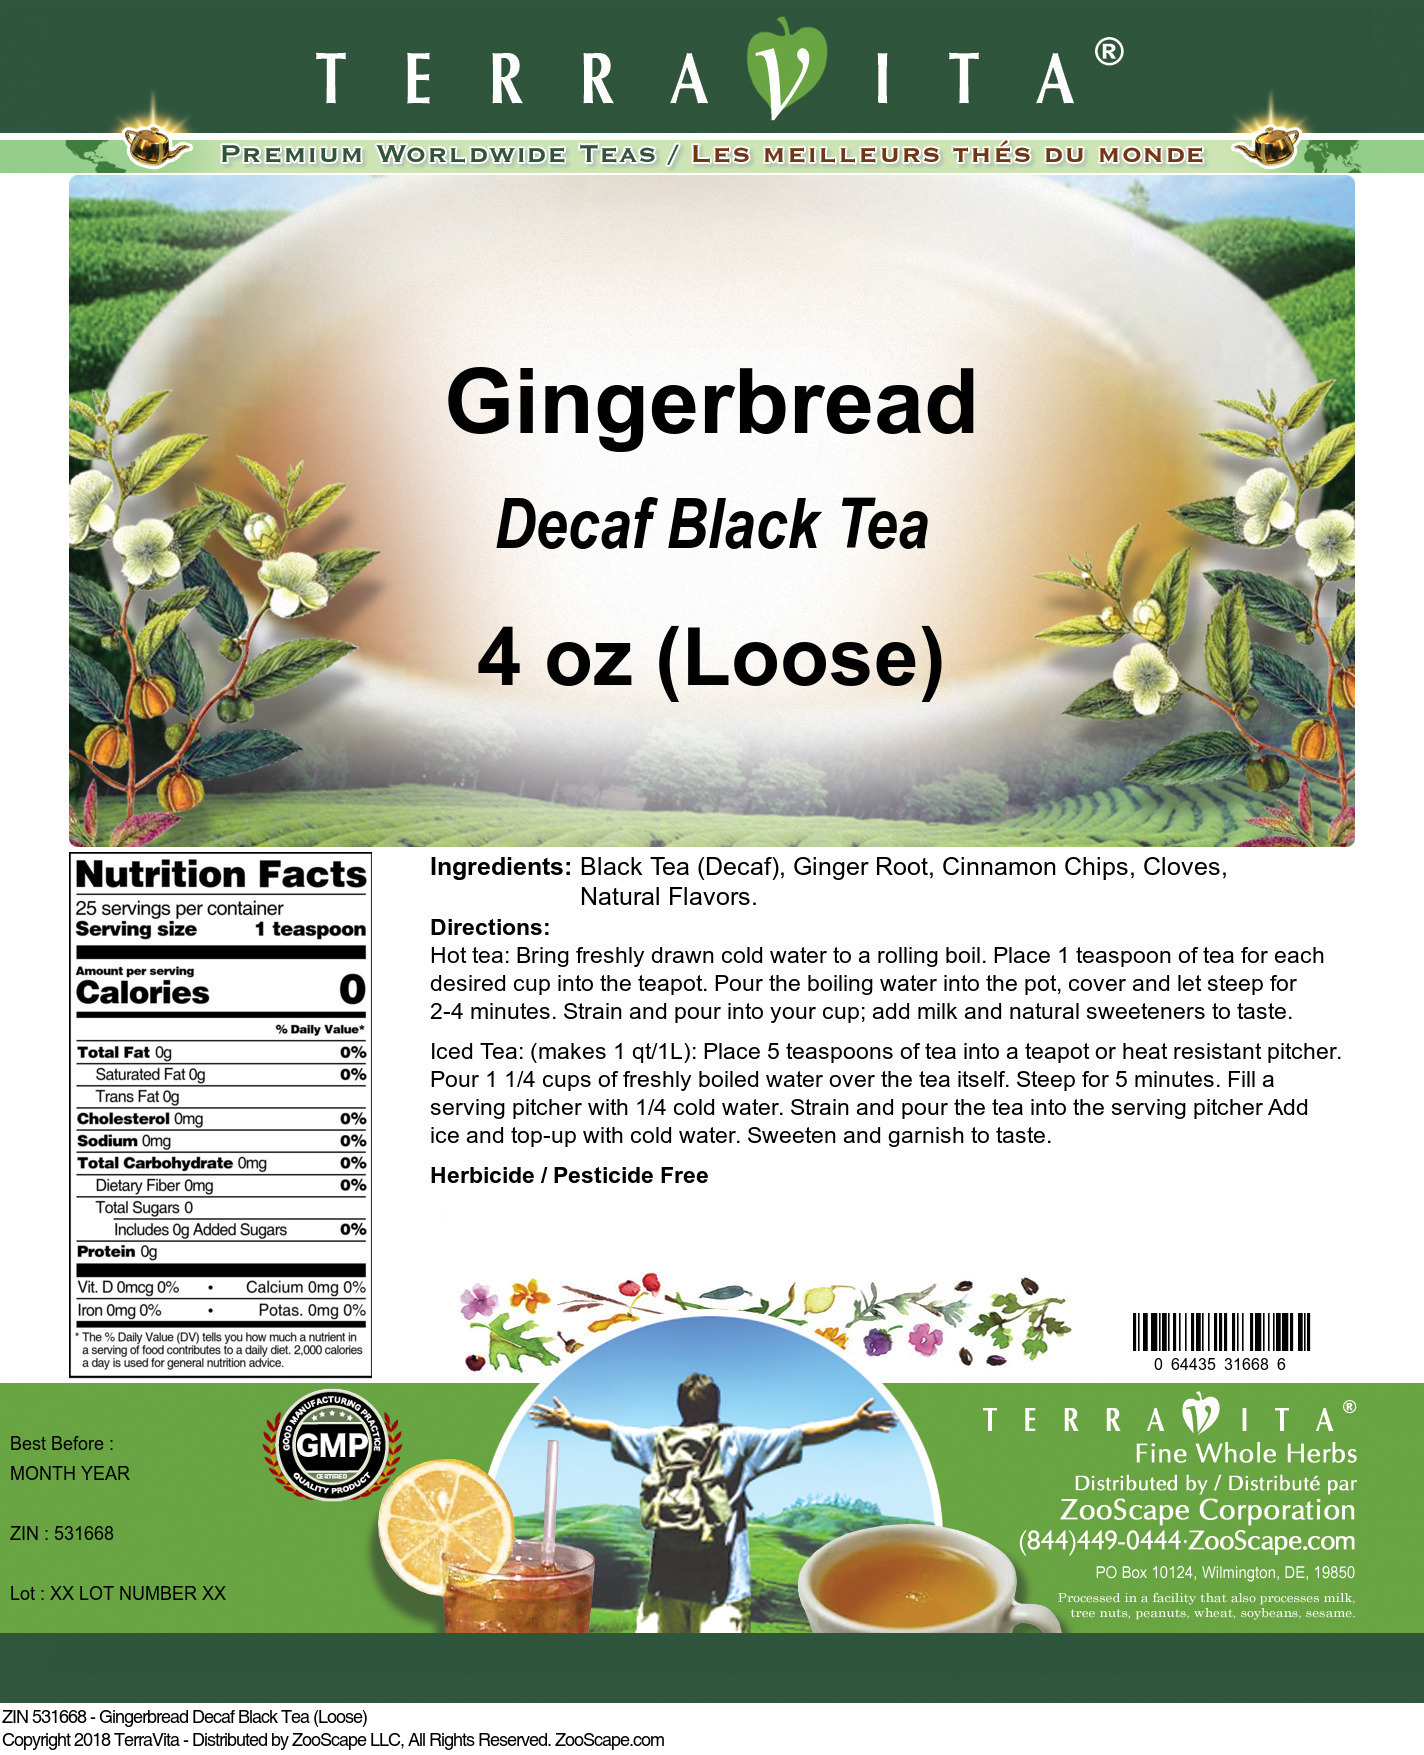 Gingerbread Decaf Black Tea (Loose) - Label